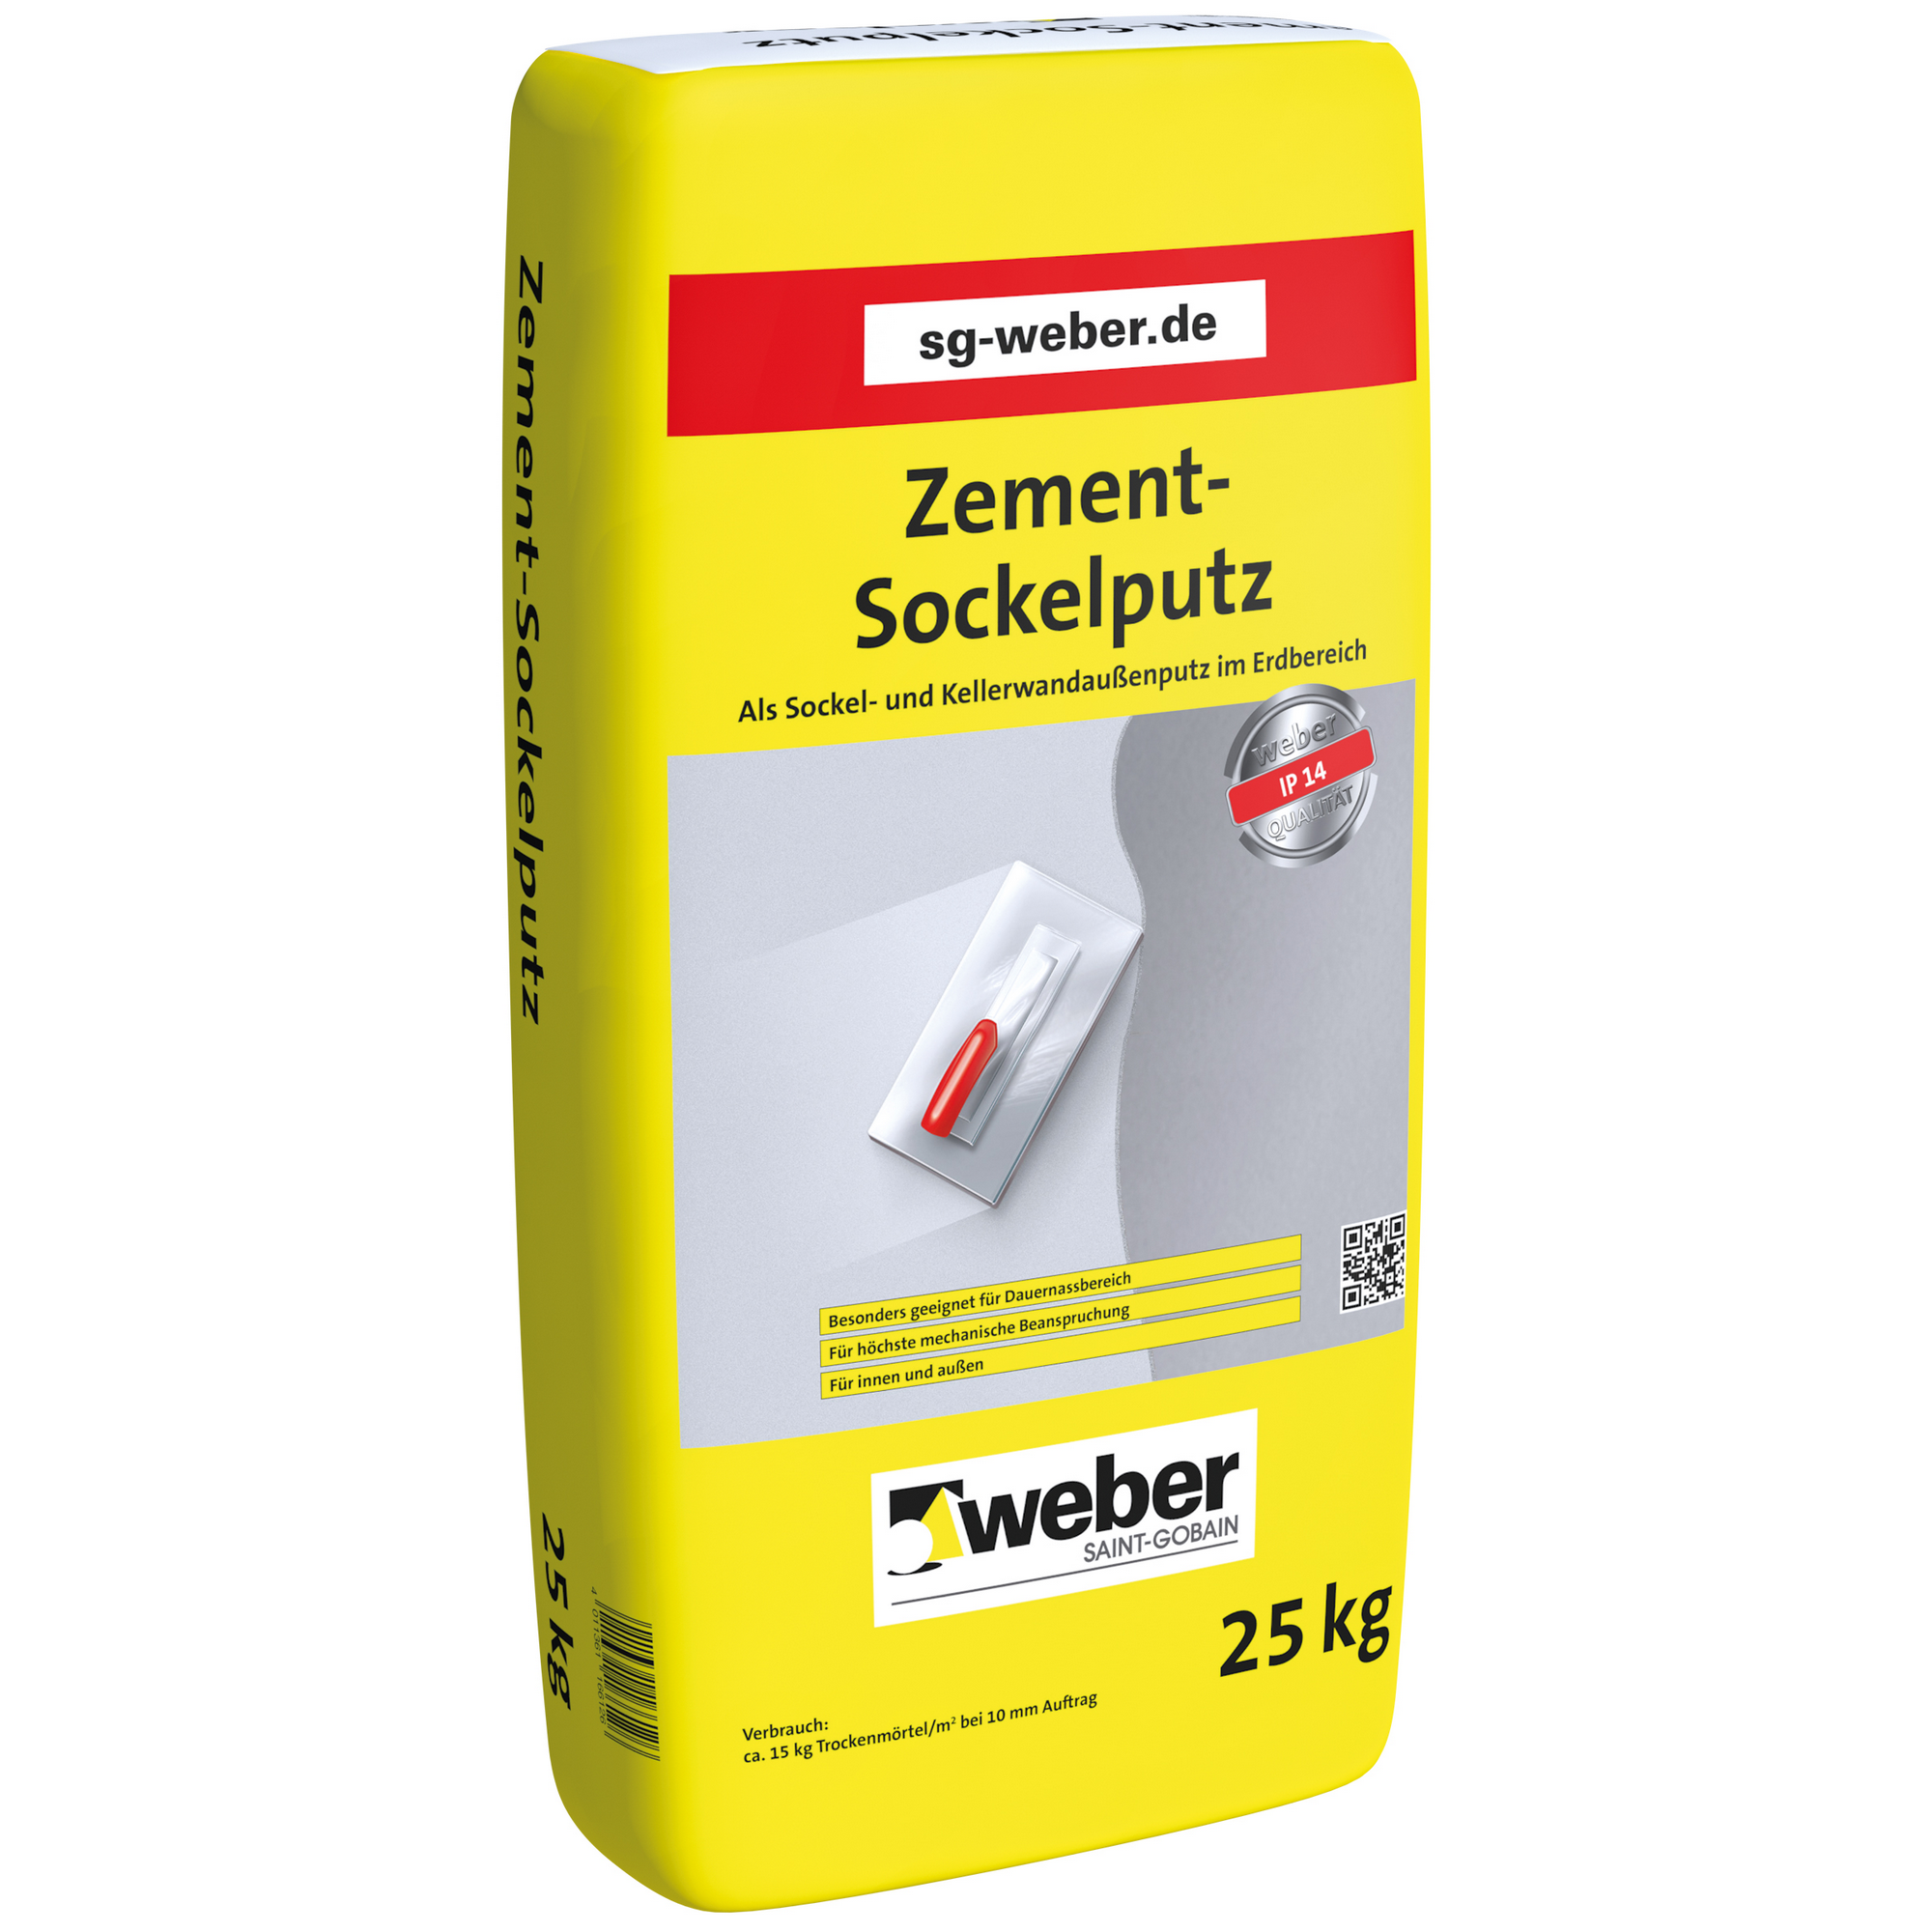 Zement-Sockelputz 25 kg + product picture